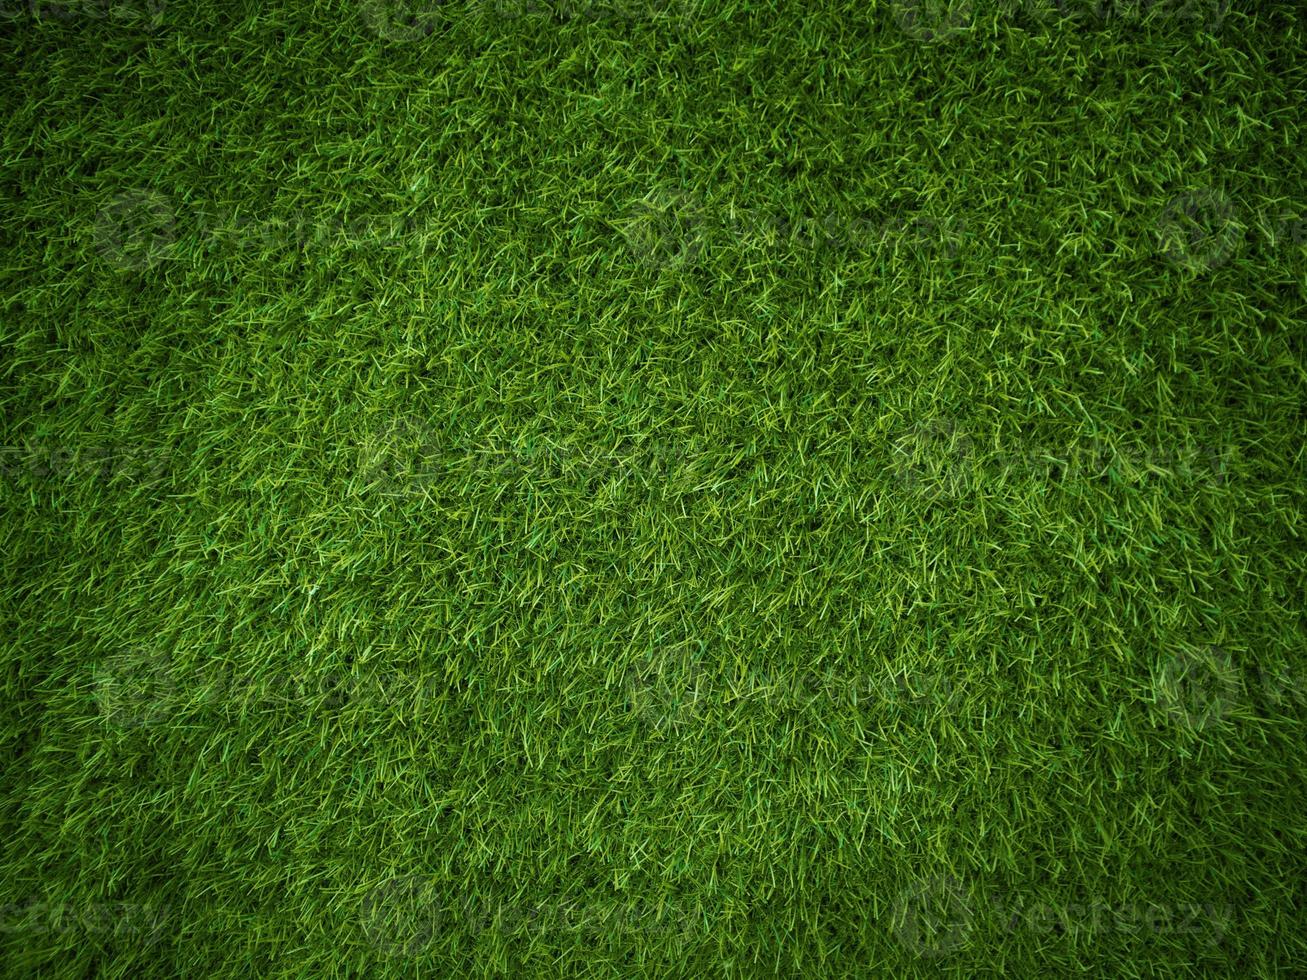 verde césped textura antecedentes césped jardín concepto usado para haciendo verde antecedentes fútbol americano paso, césped golf, verde césped modelo texturizado fondo... foto